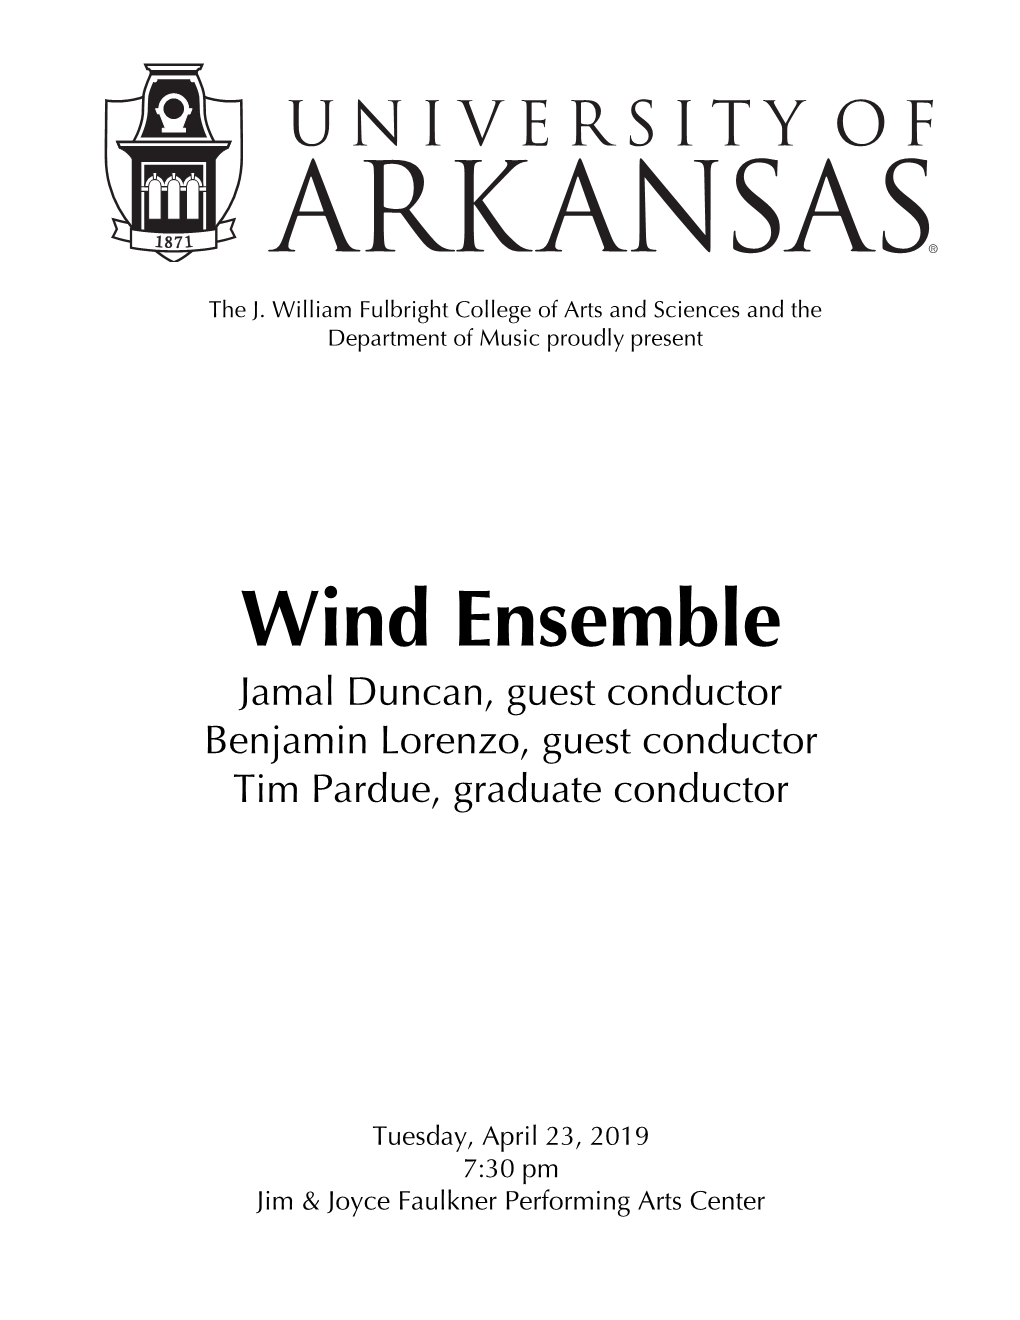 Wind Ensemble Jamal Duncan, Guest Conductor Benjamin Lorenzo, Guest Conductor Tim Pardue, Graduate Conductor